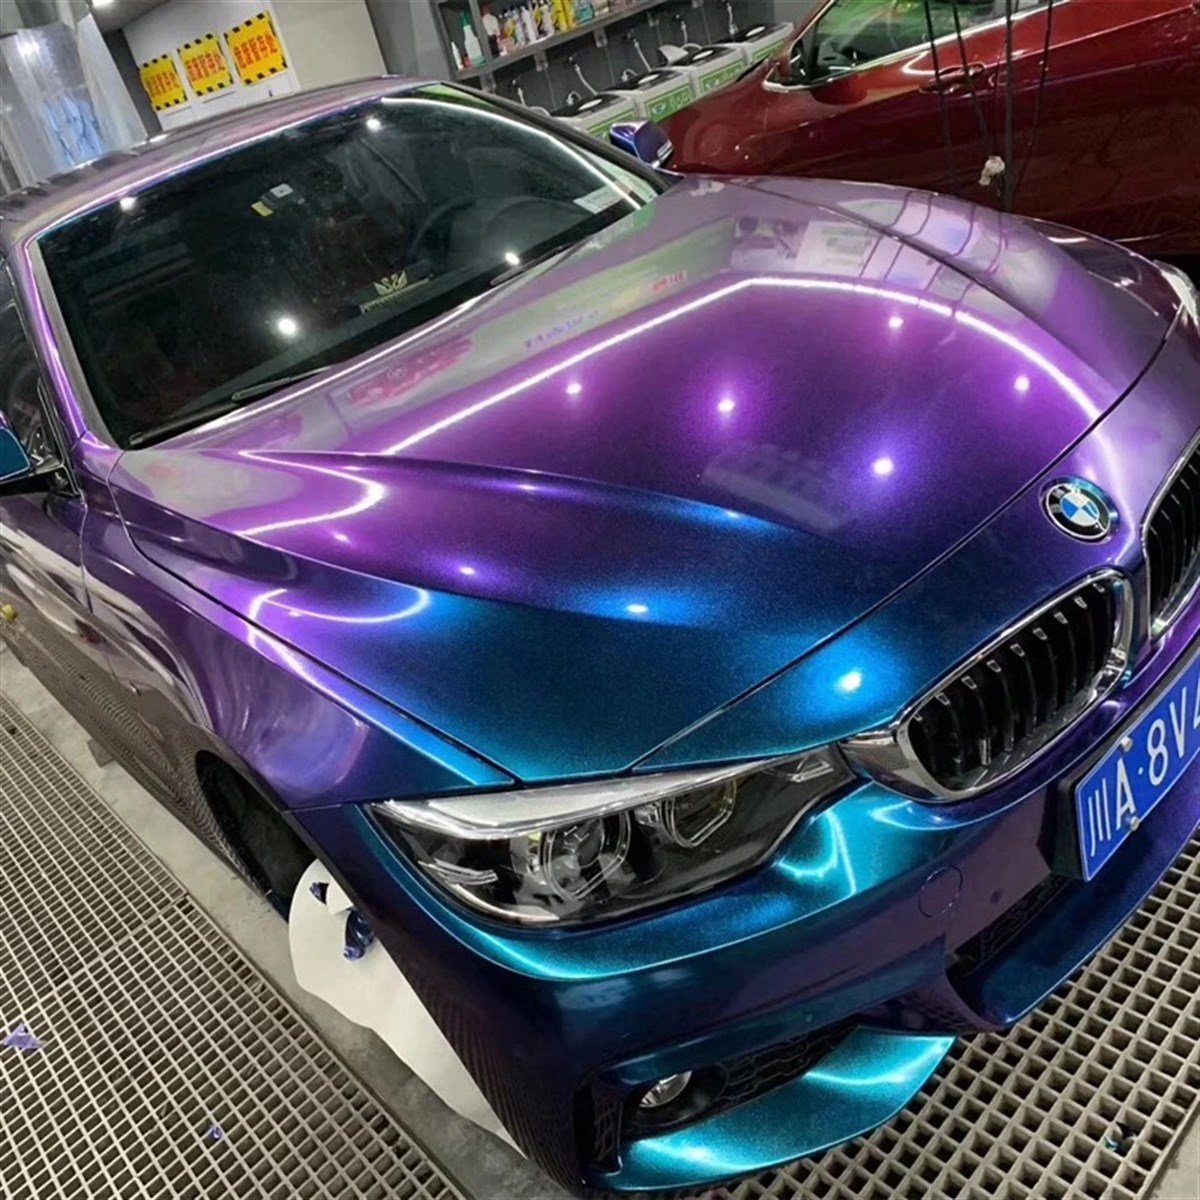 BMW Marka Araç Bukalemun Mor Cast Folyo Full Kaplama [ Motiker